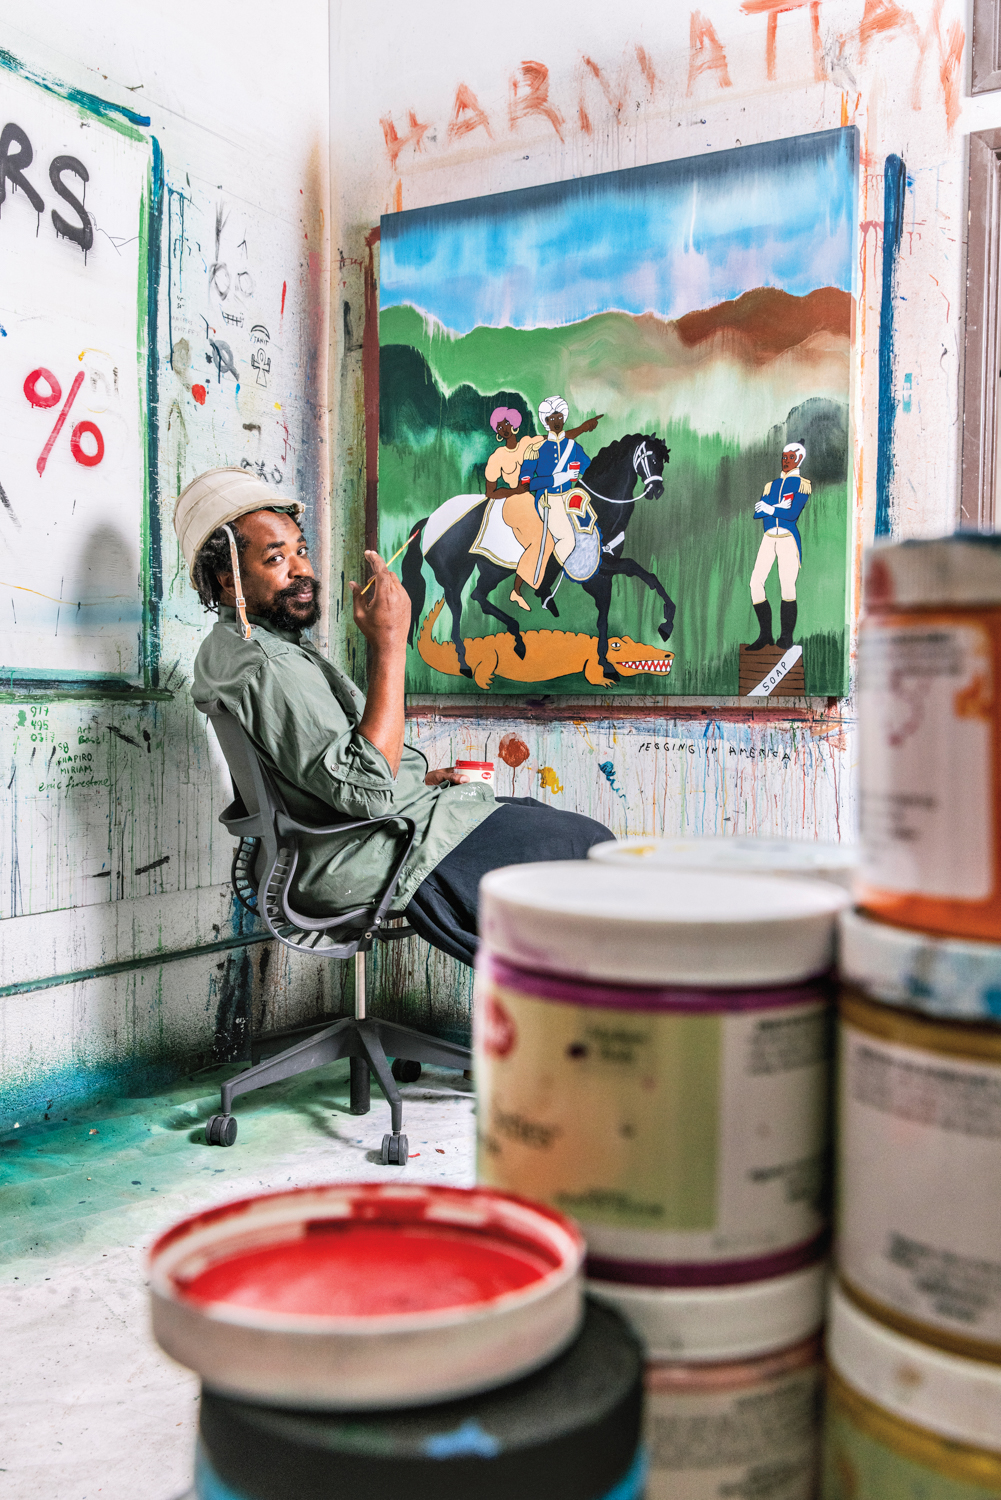 artist Umar raschid in his studio, holding a paintbrush